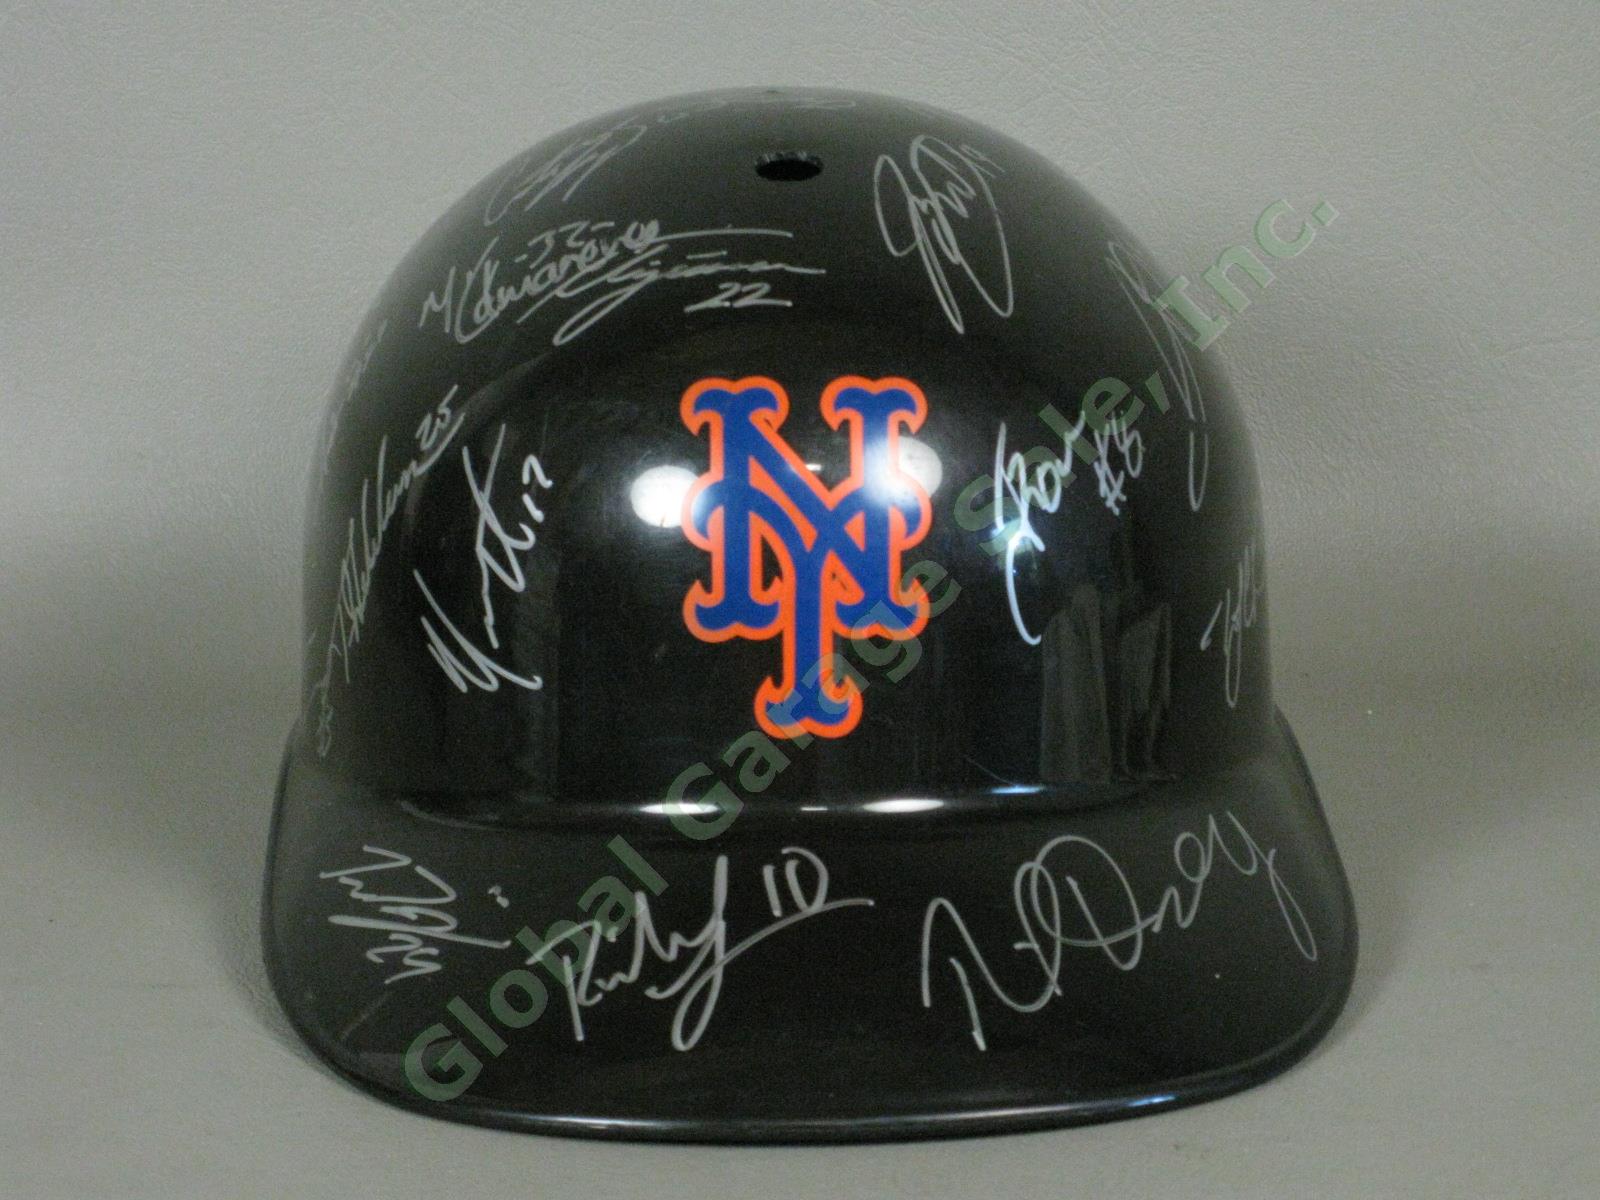 2011 Brooklyn Cyclones Team Signed Baseball Helmet MiLB MLB NYPL New York Mets